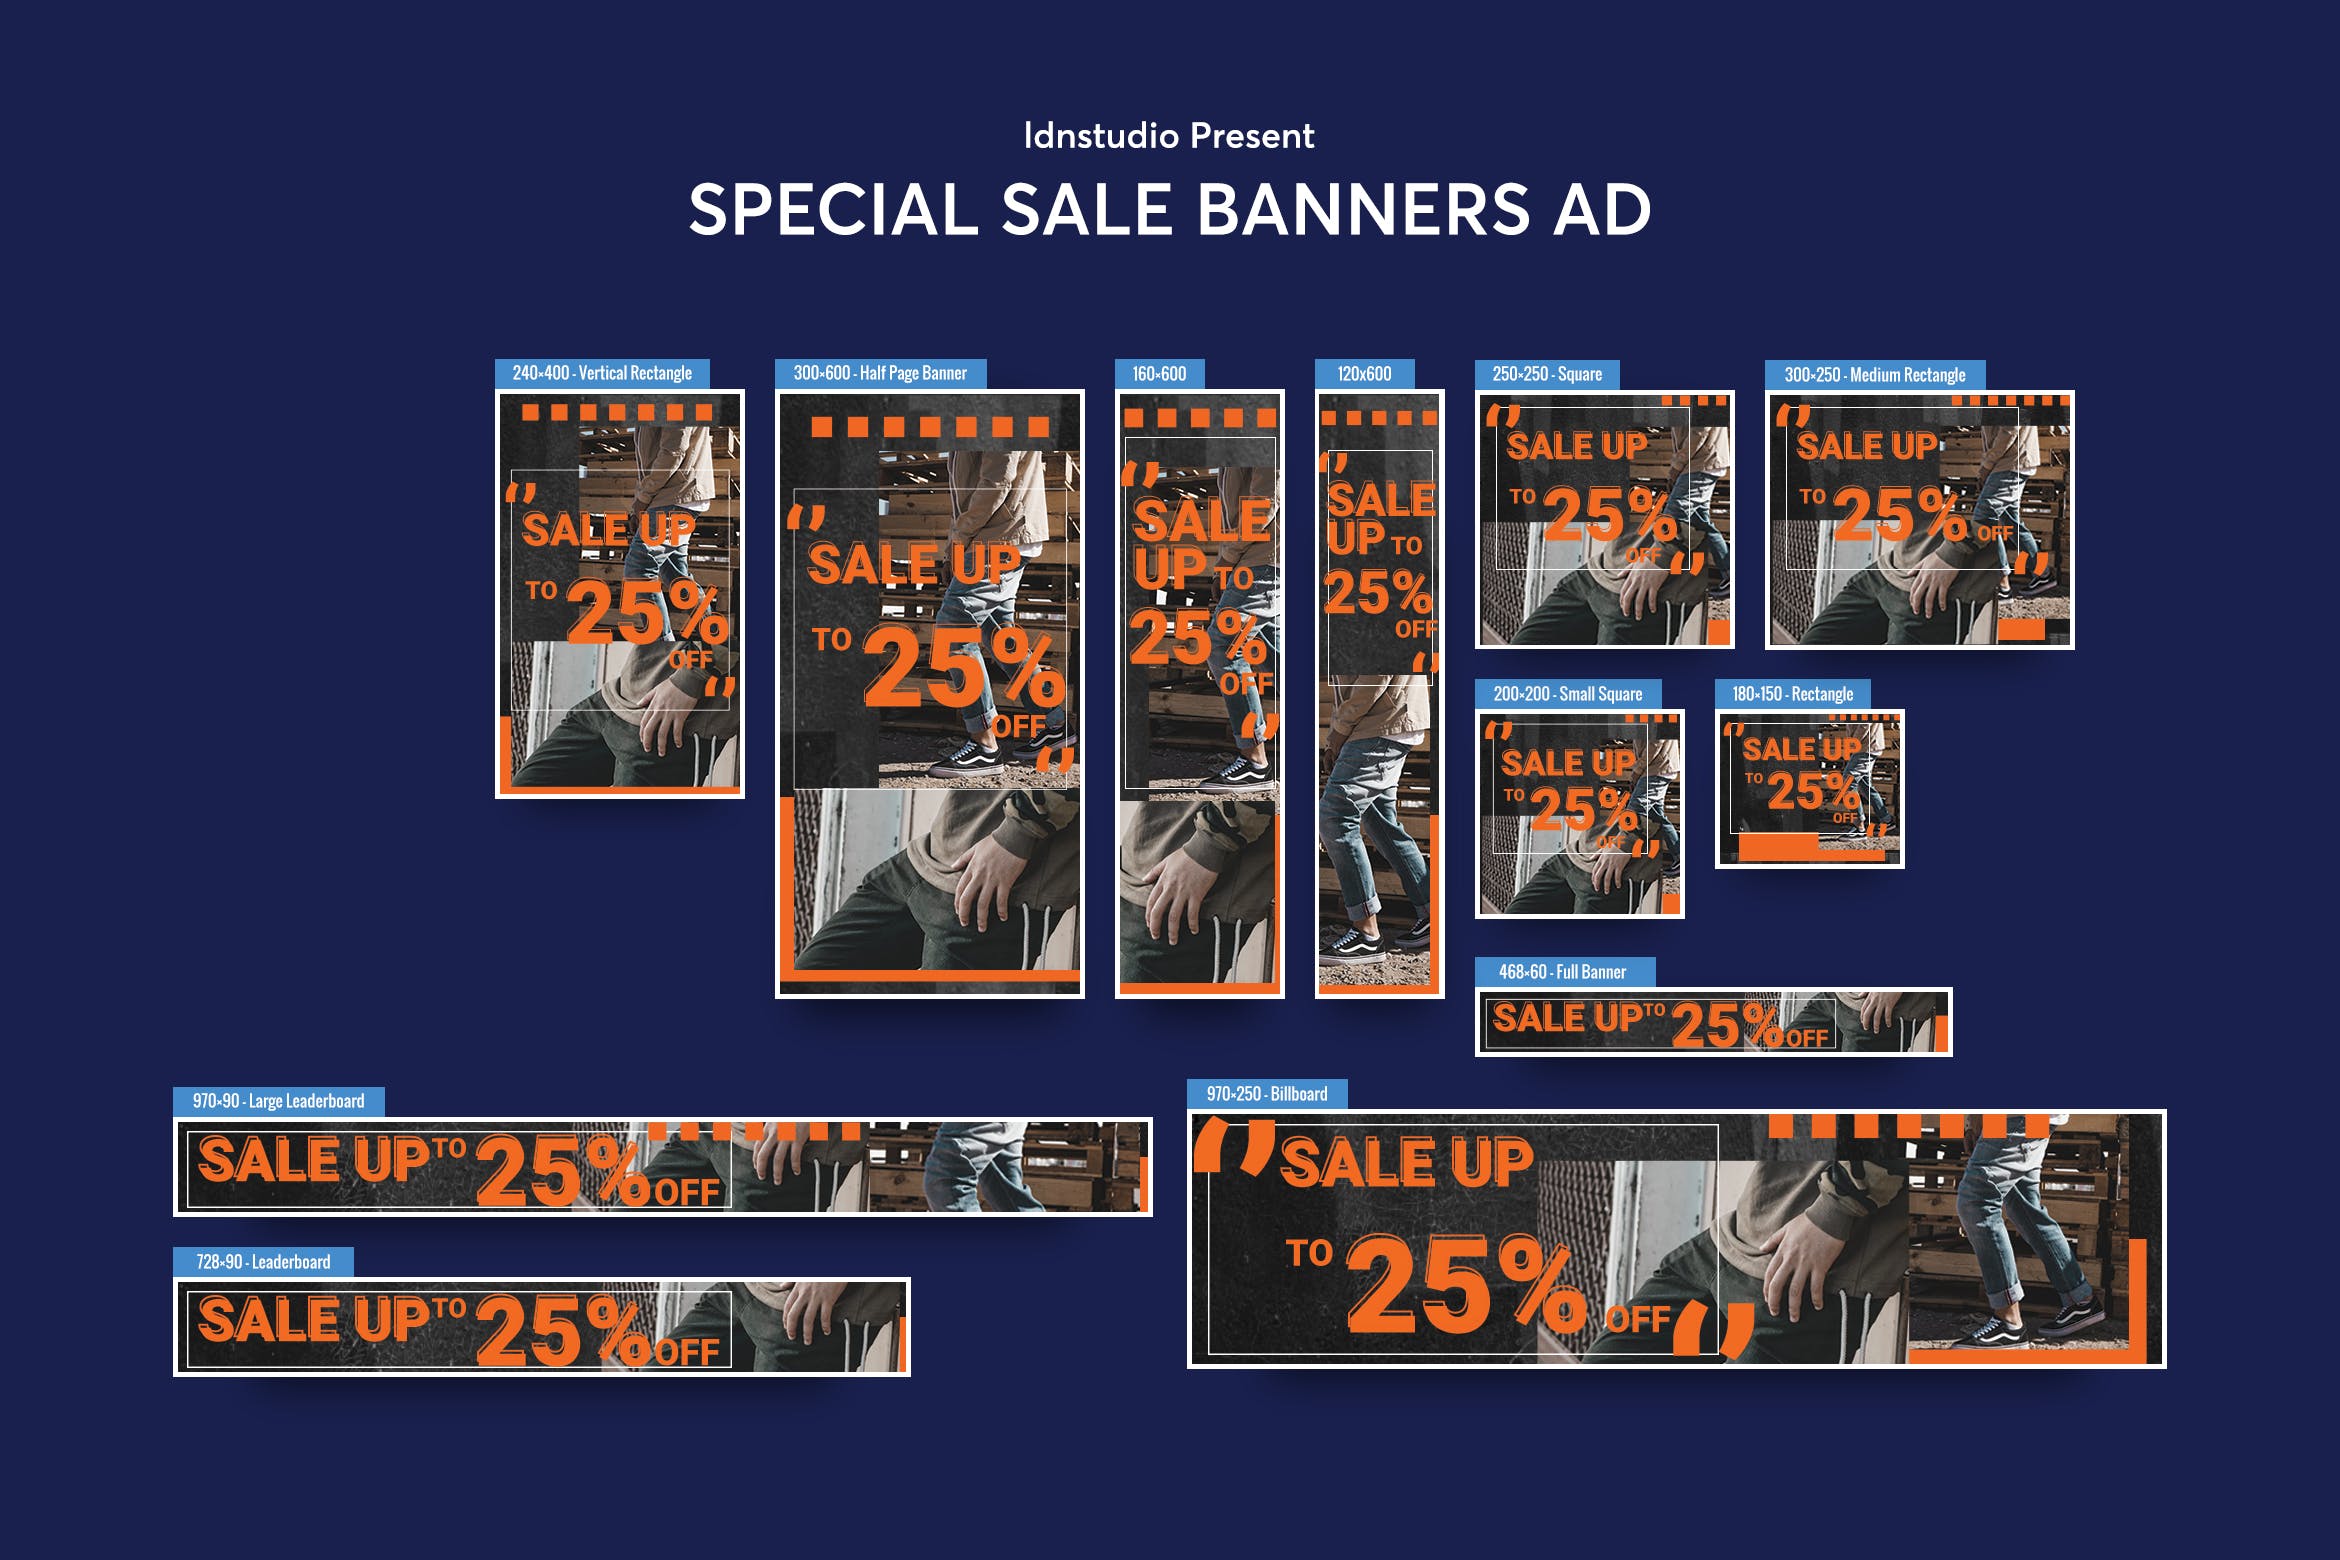 打折促销广告常规尺寸Banner图设计模板 Special Sale Banners Ad PSD Template插图